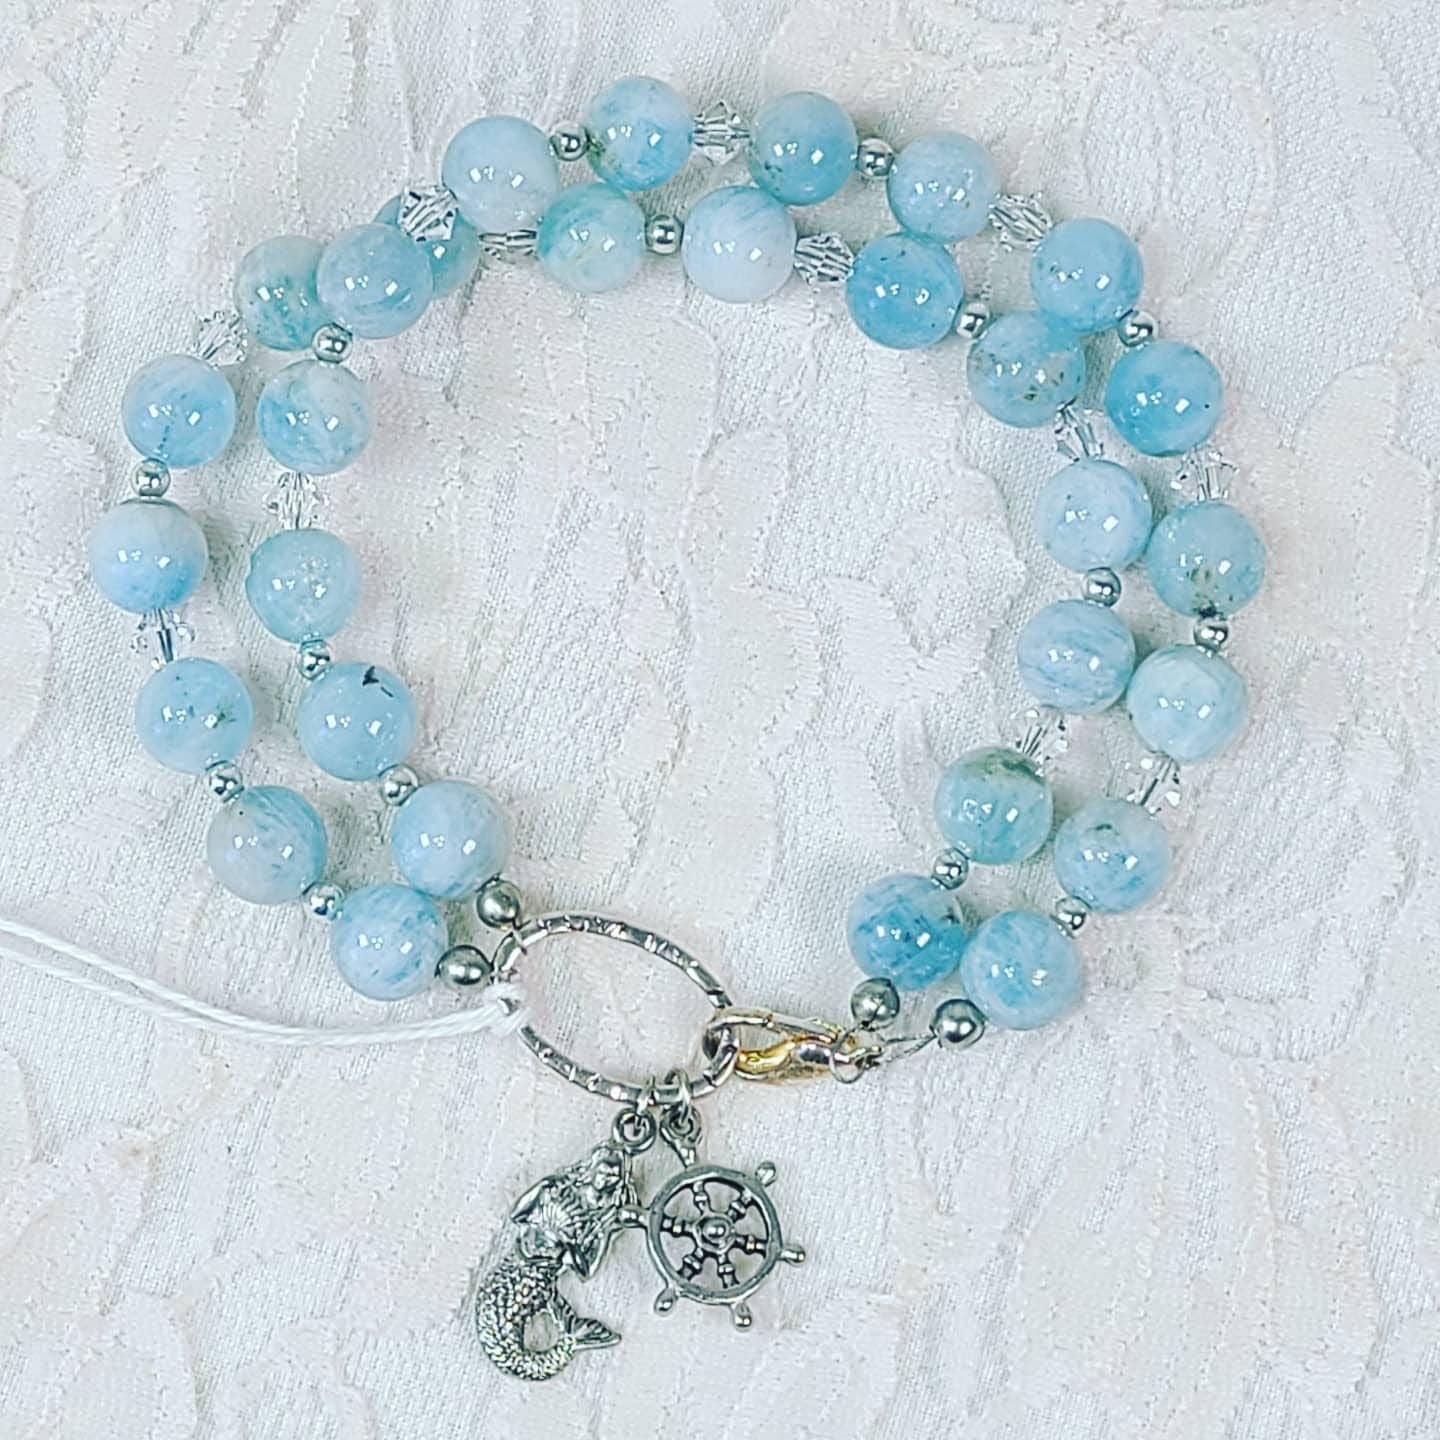 MERMAID Bracelet ~ Blue Aquamarine Round Beads and Swarovski Crystal Beads & Sterling Silver Bali Bead Accents